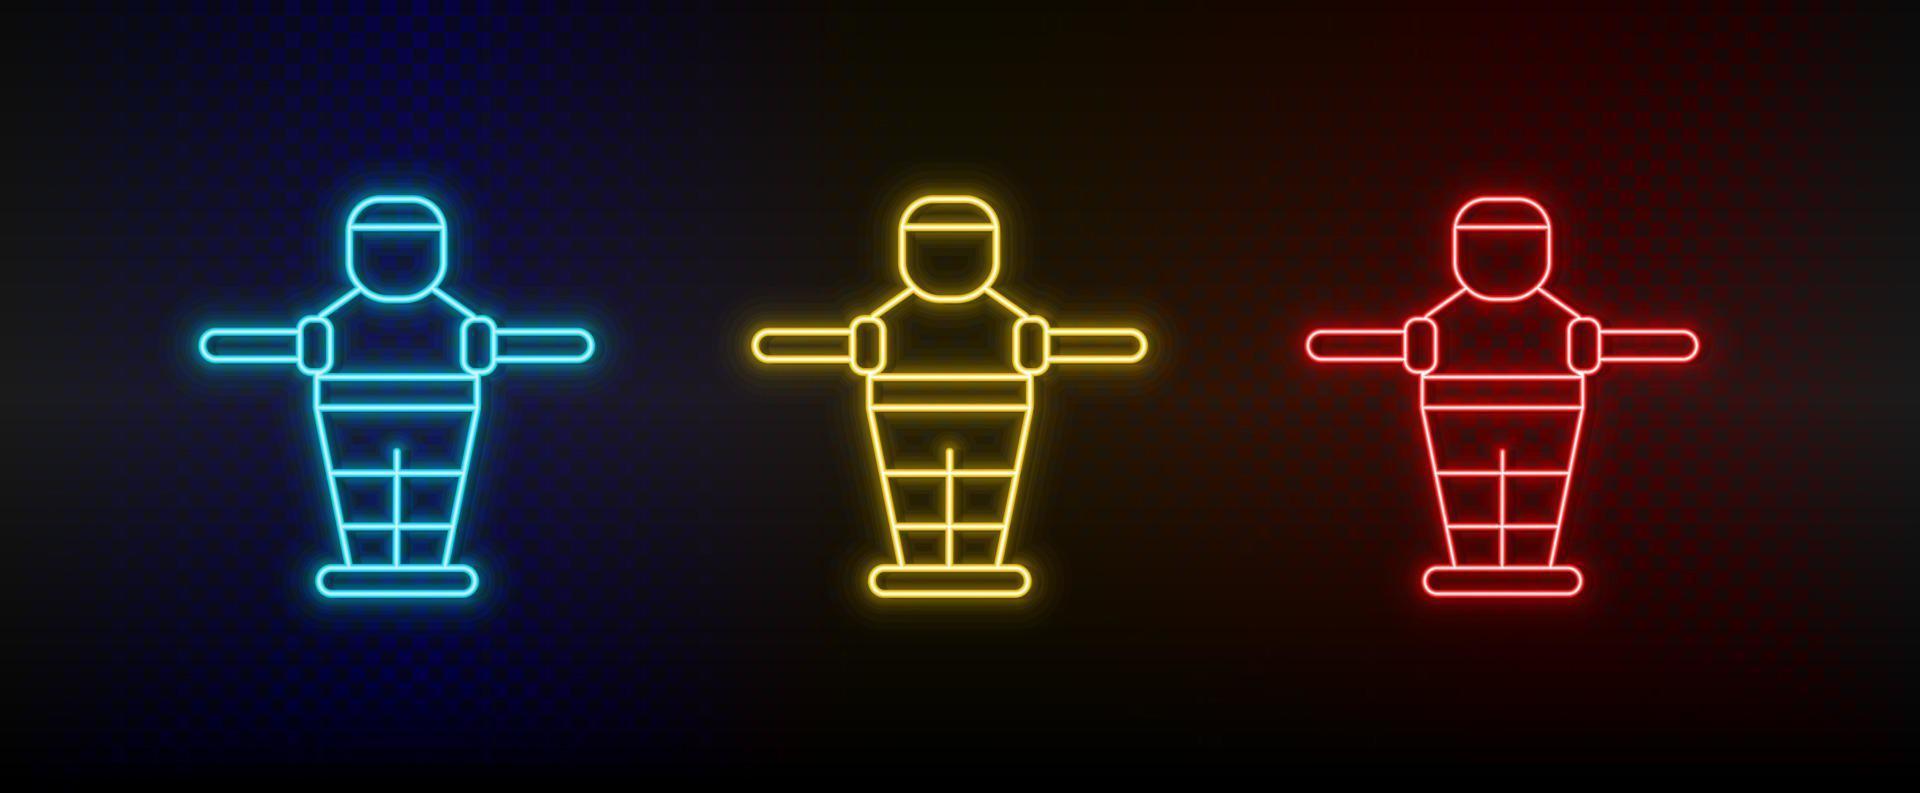 iconos de neón. juego de futbolín arcade retro. conjunto de icono de vector de neón rojo, azul, amarillo sobre fondo oscuro